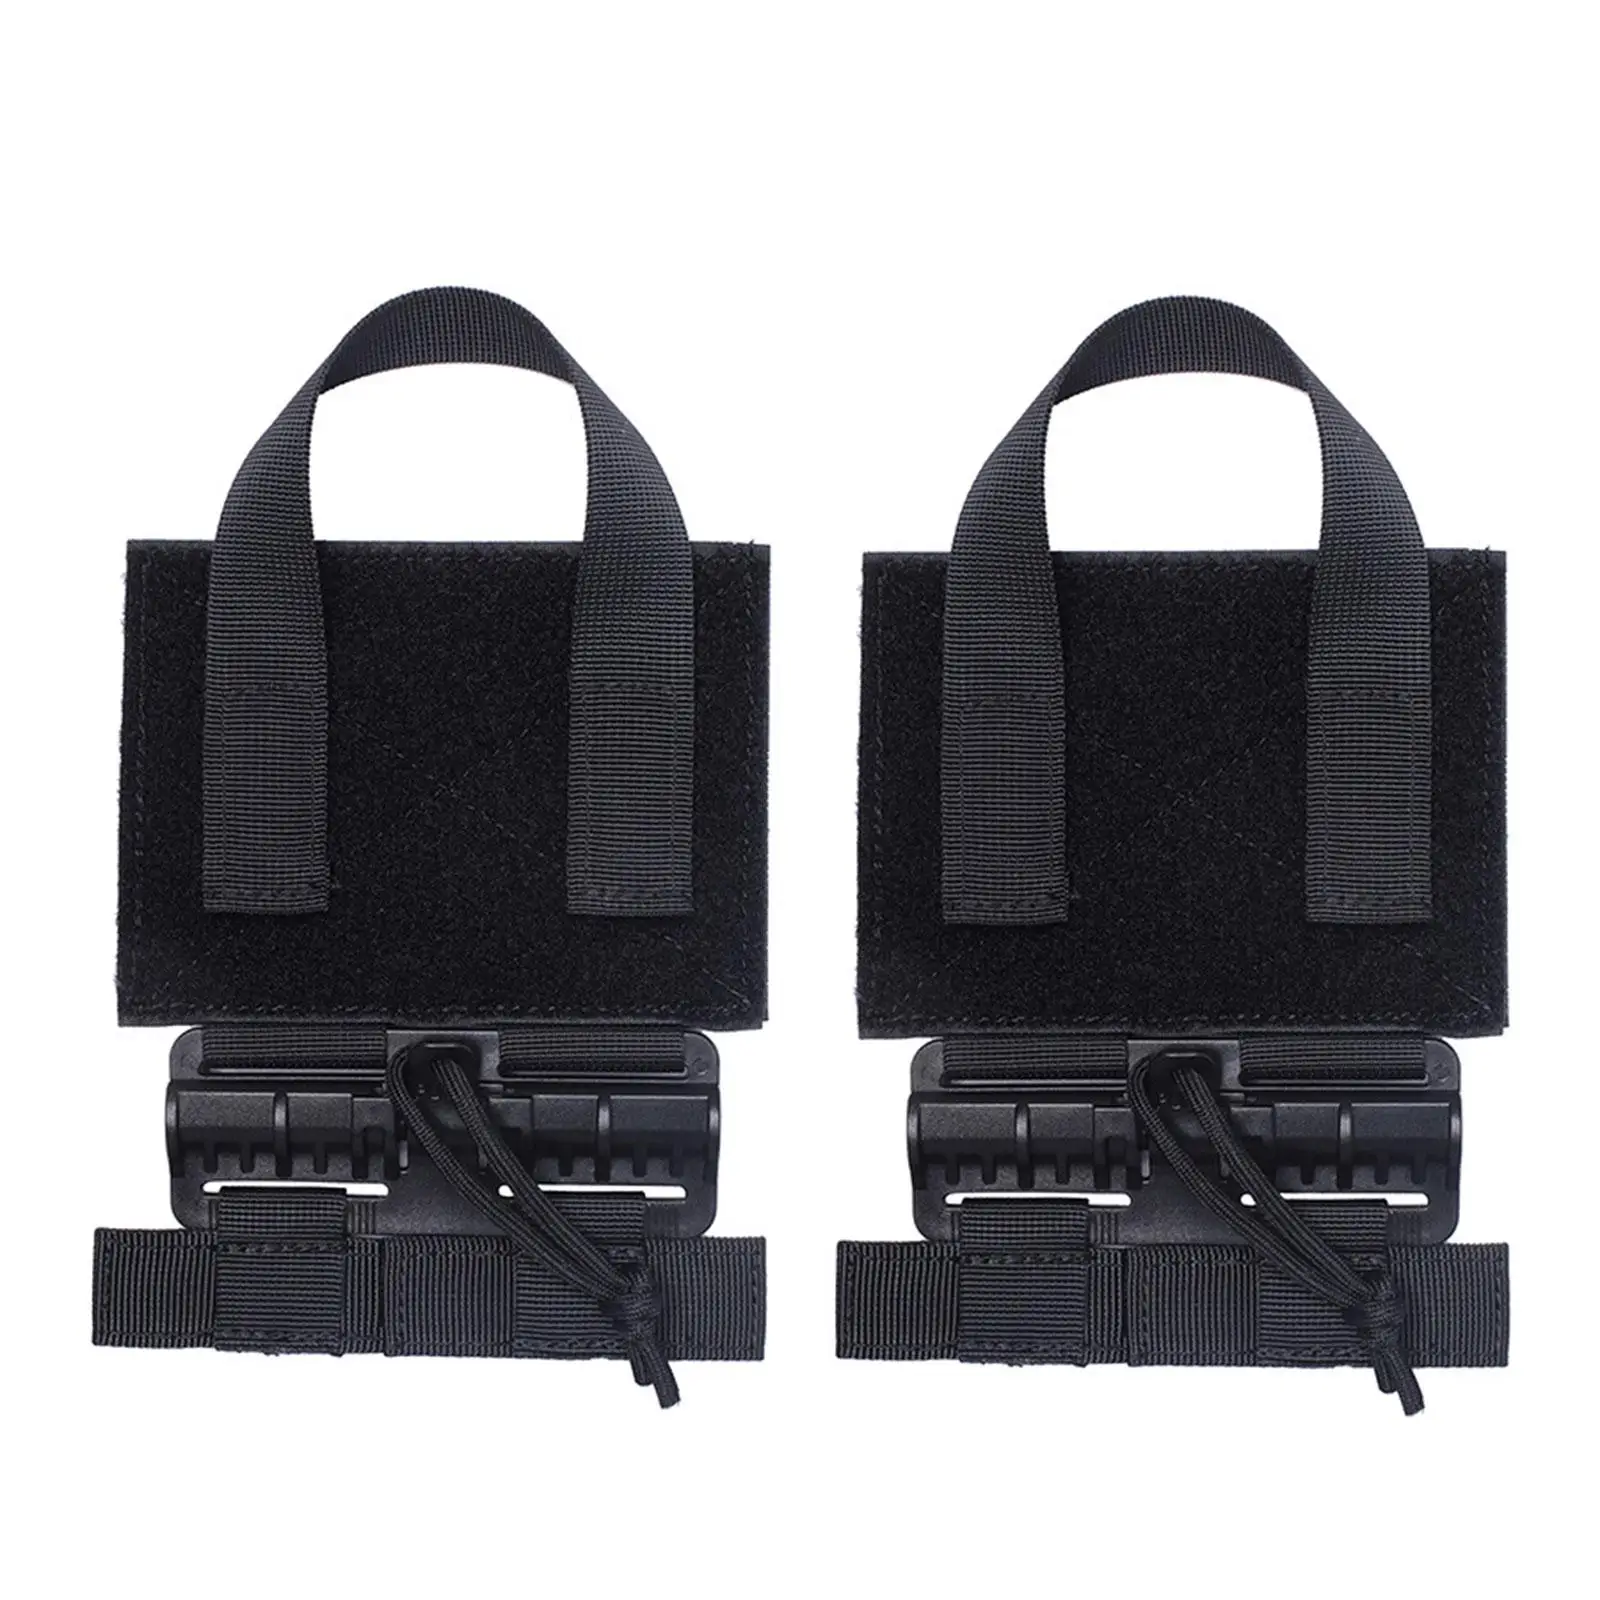 2x Vest Quick Release Buckle Set Tube Cummerbund Adapter Portable for Cosplay Tool